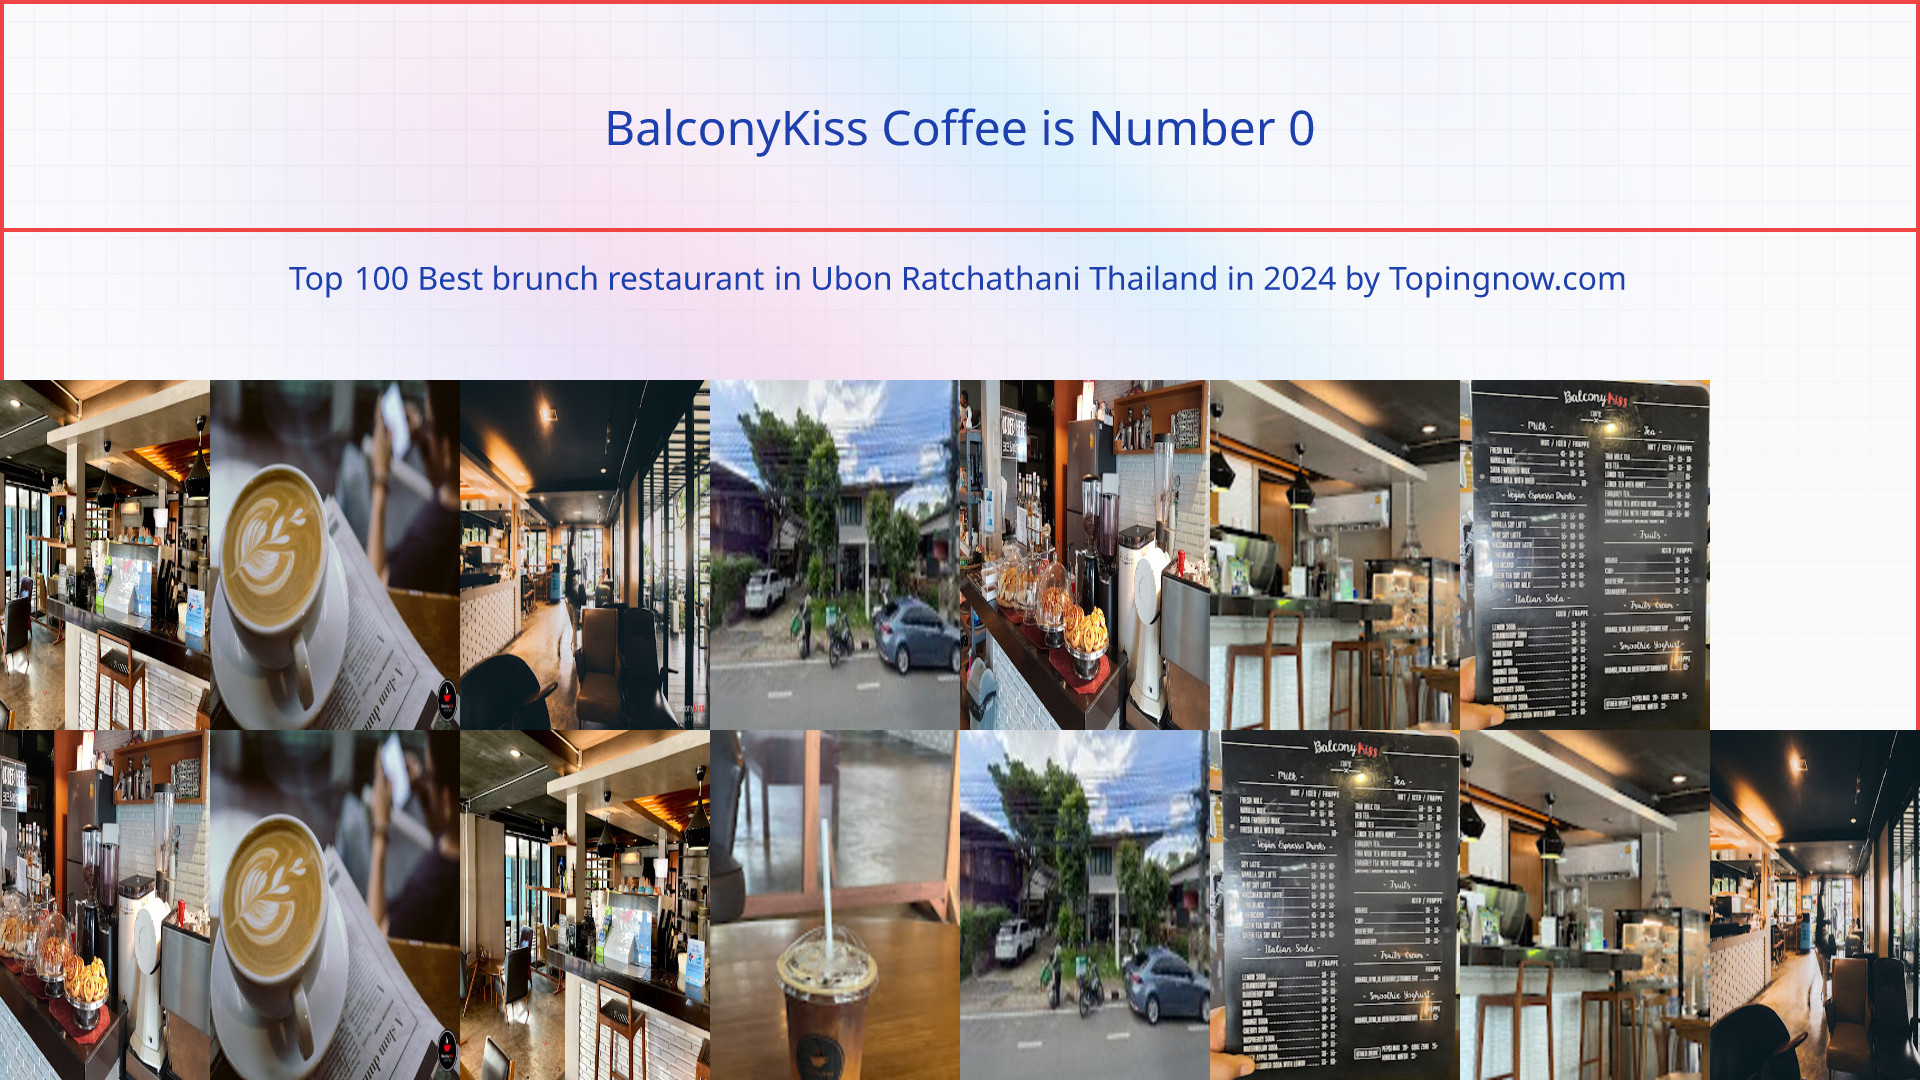 BalconyKiss Coffee: Top 100 Best brunch restaurant in Ubon Ratchathani Thailand in 2024